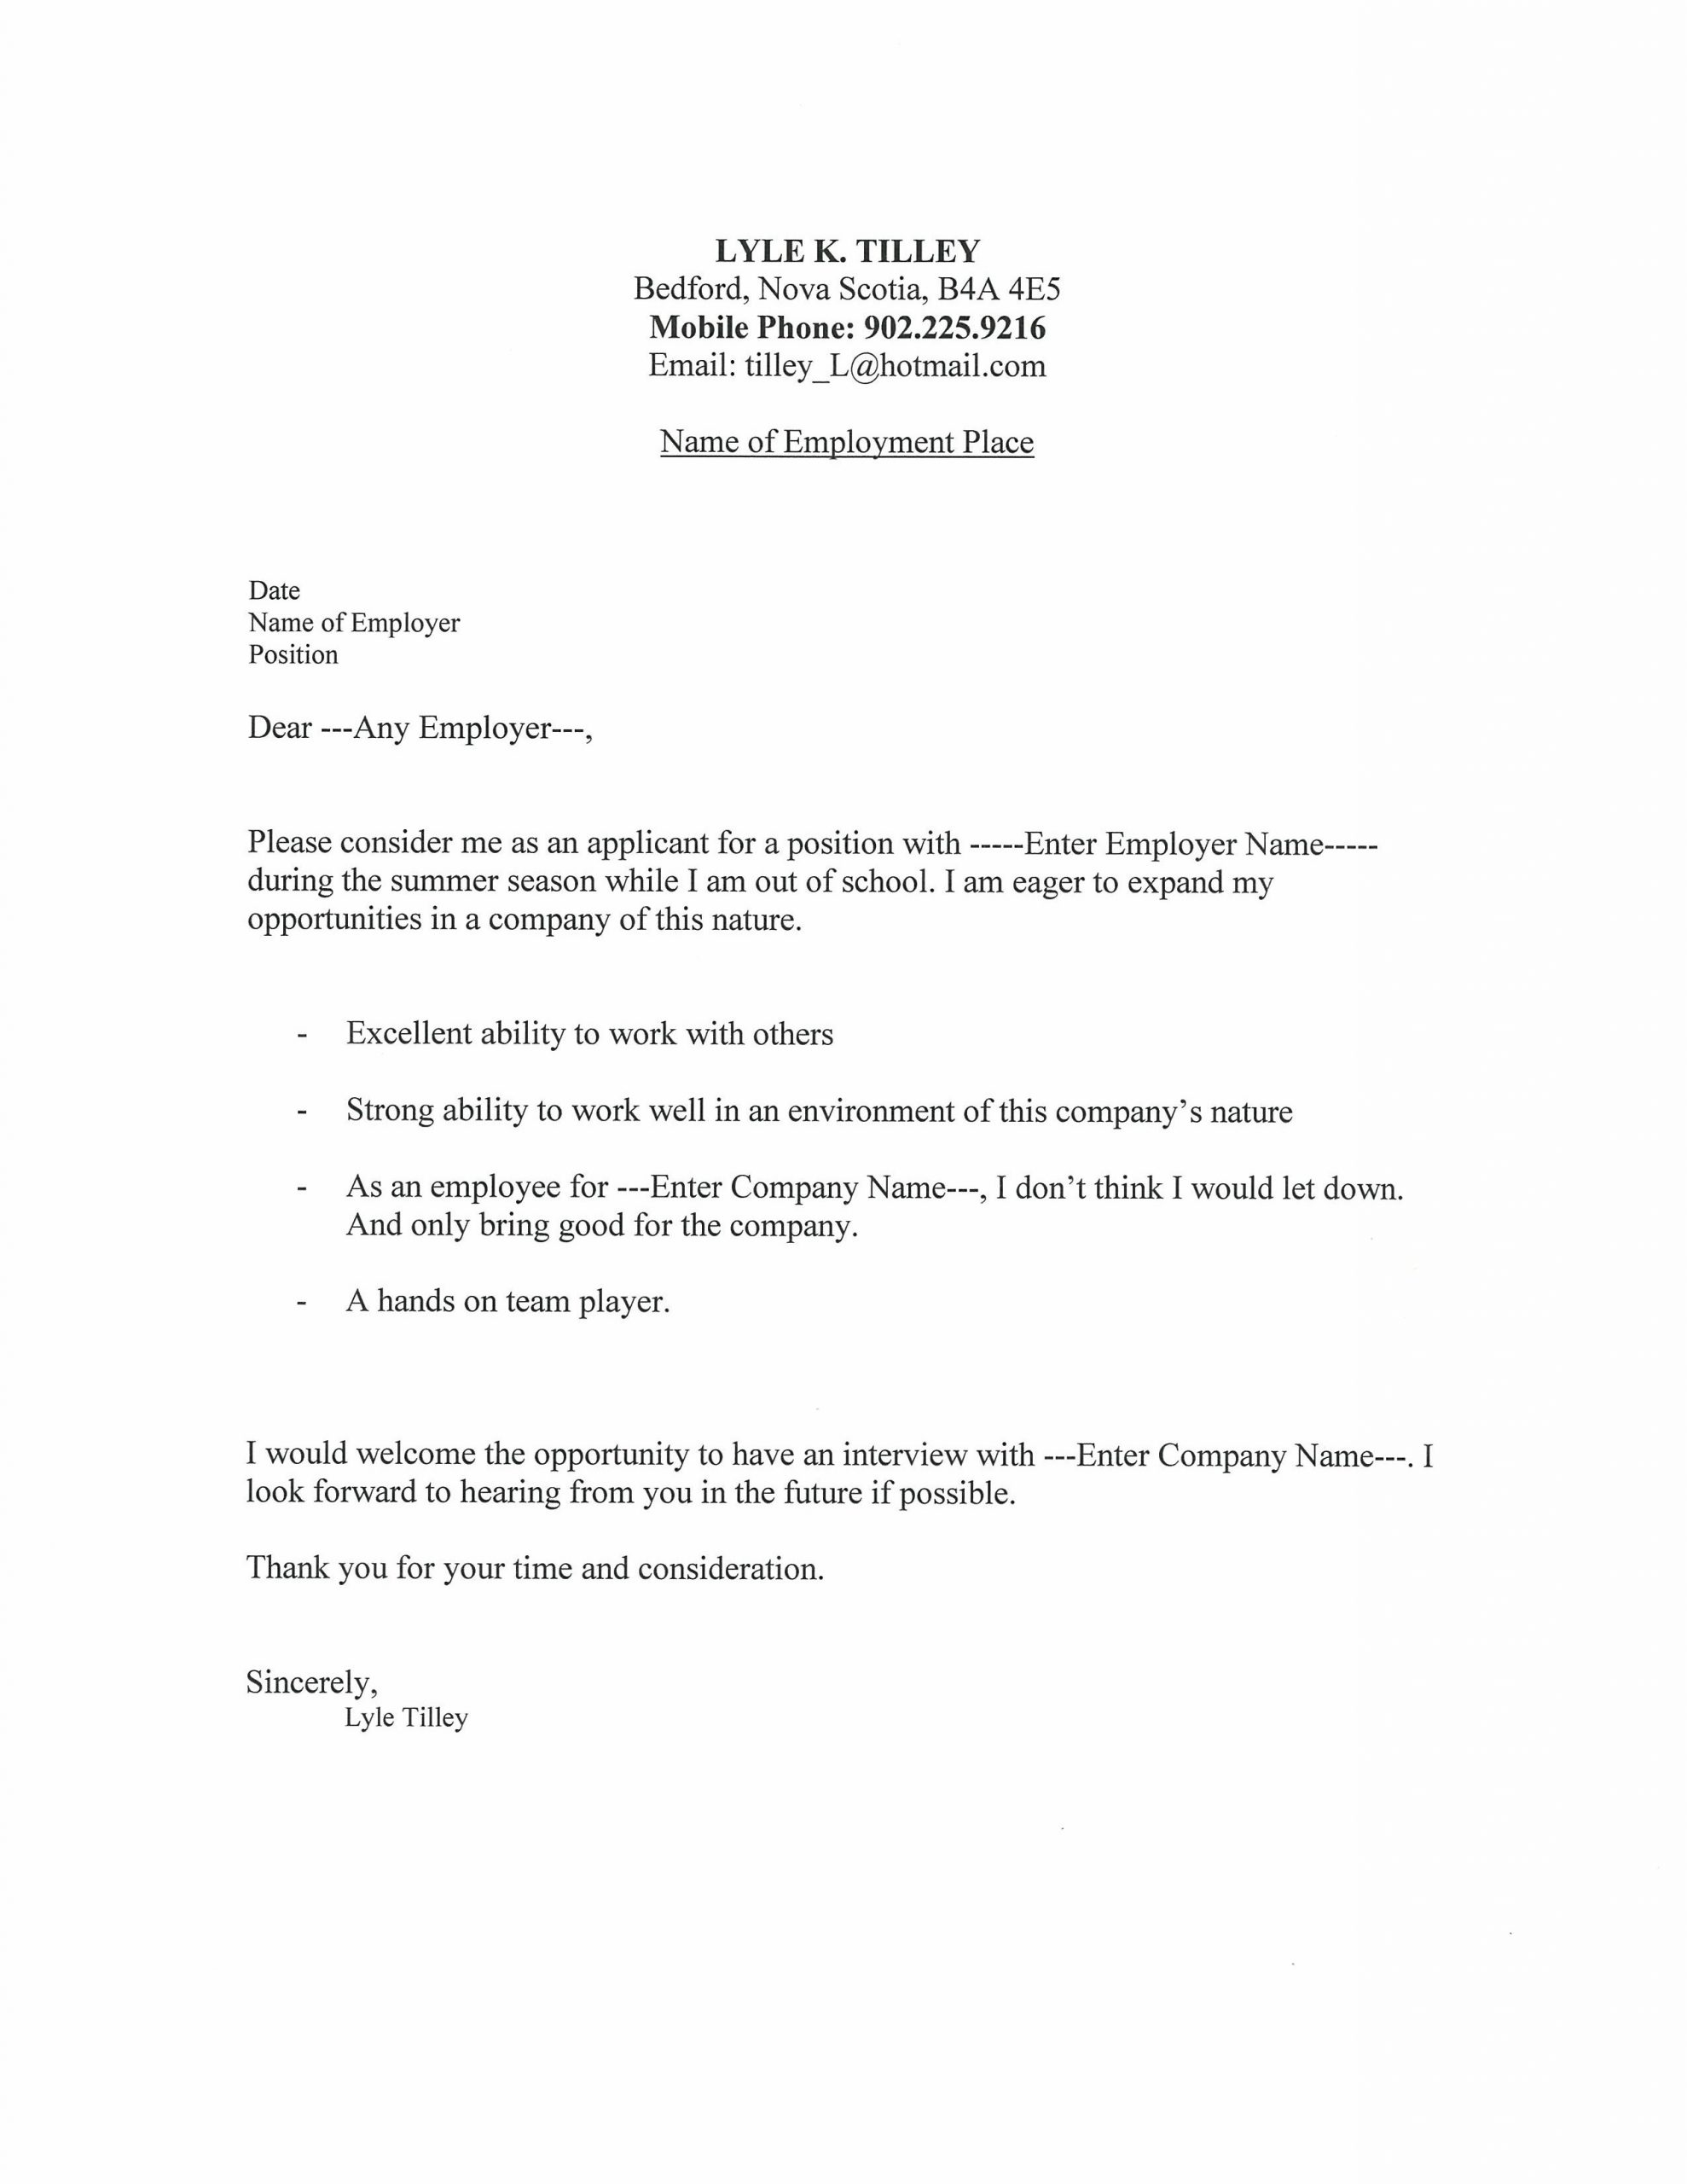 Free Sample Of A Resume Cover Letter Cover Letter for Resume Fotolip